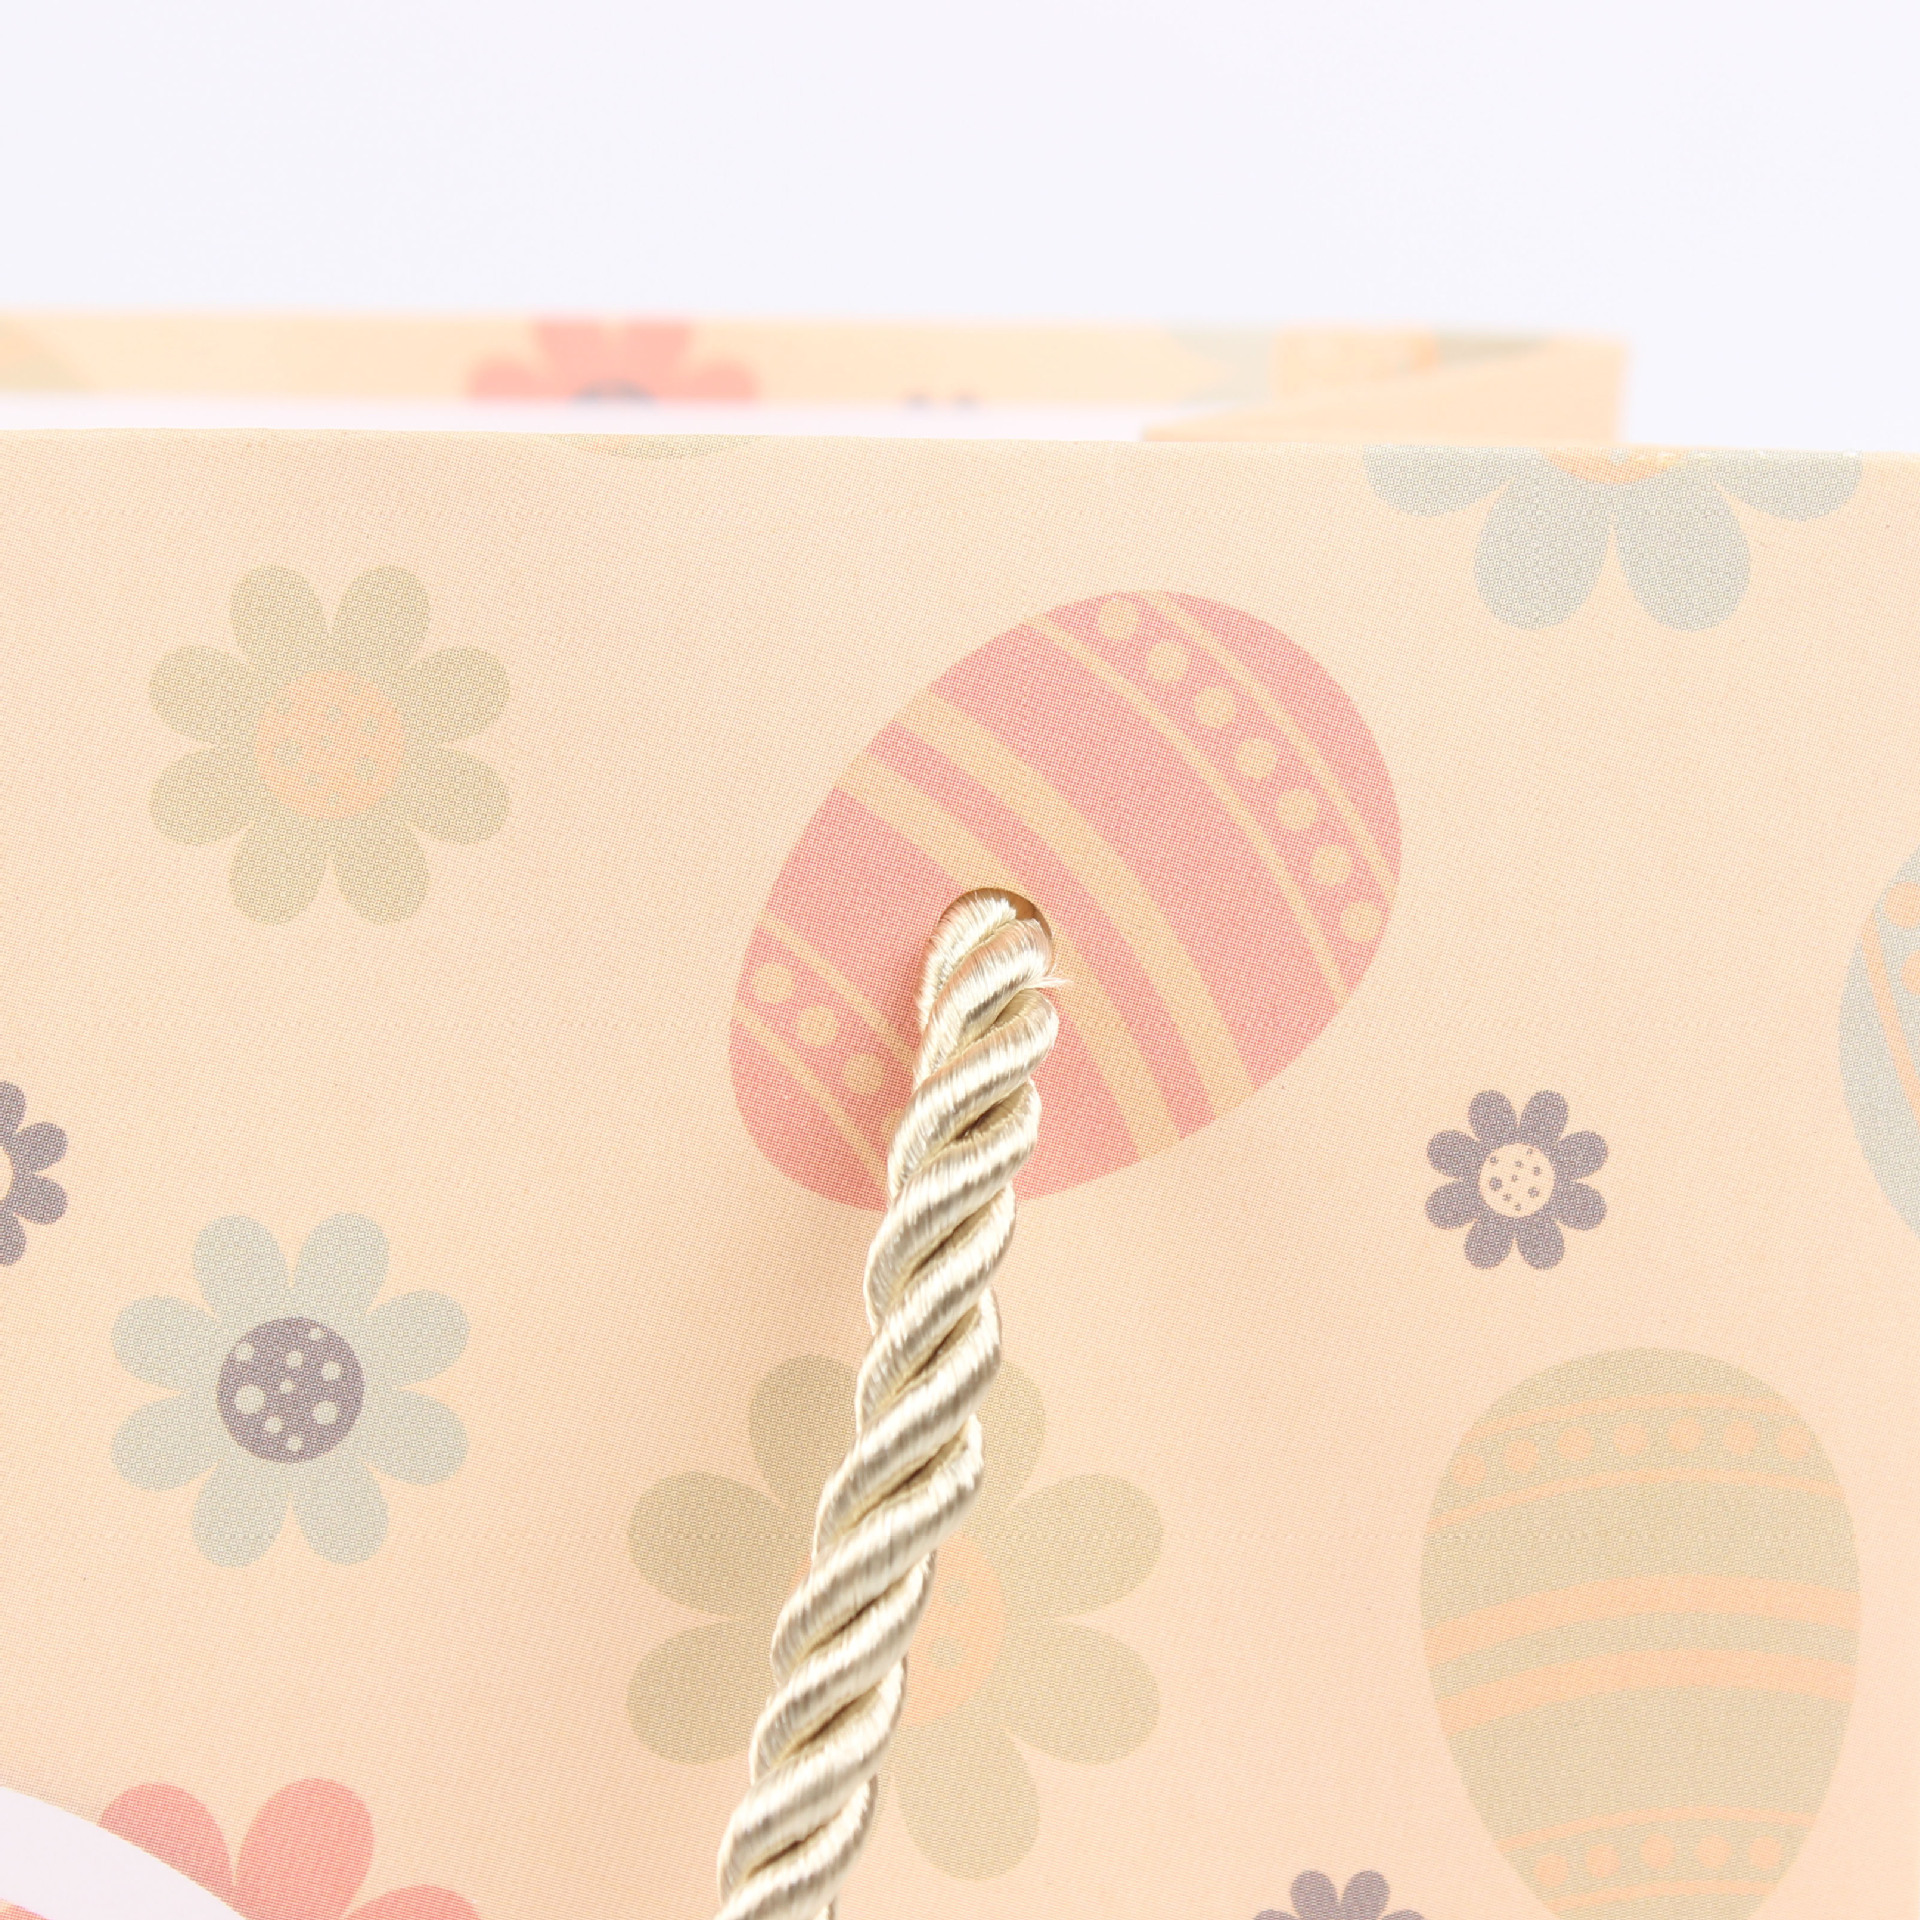 Easter Gift Bag Cute Cartoon Rabbit Egg Chicken Funny Handbag Gift Packaging Bag Paper Bag Wholesale